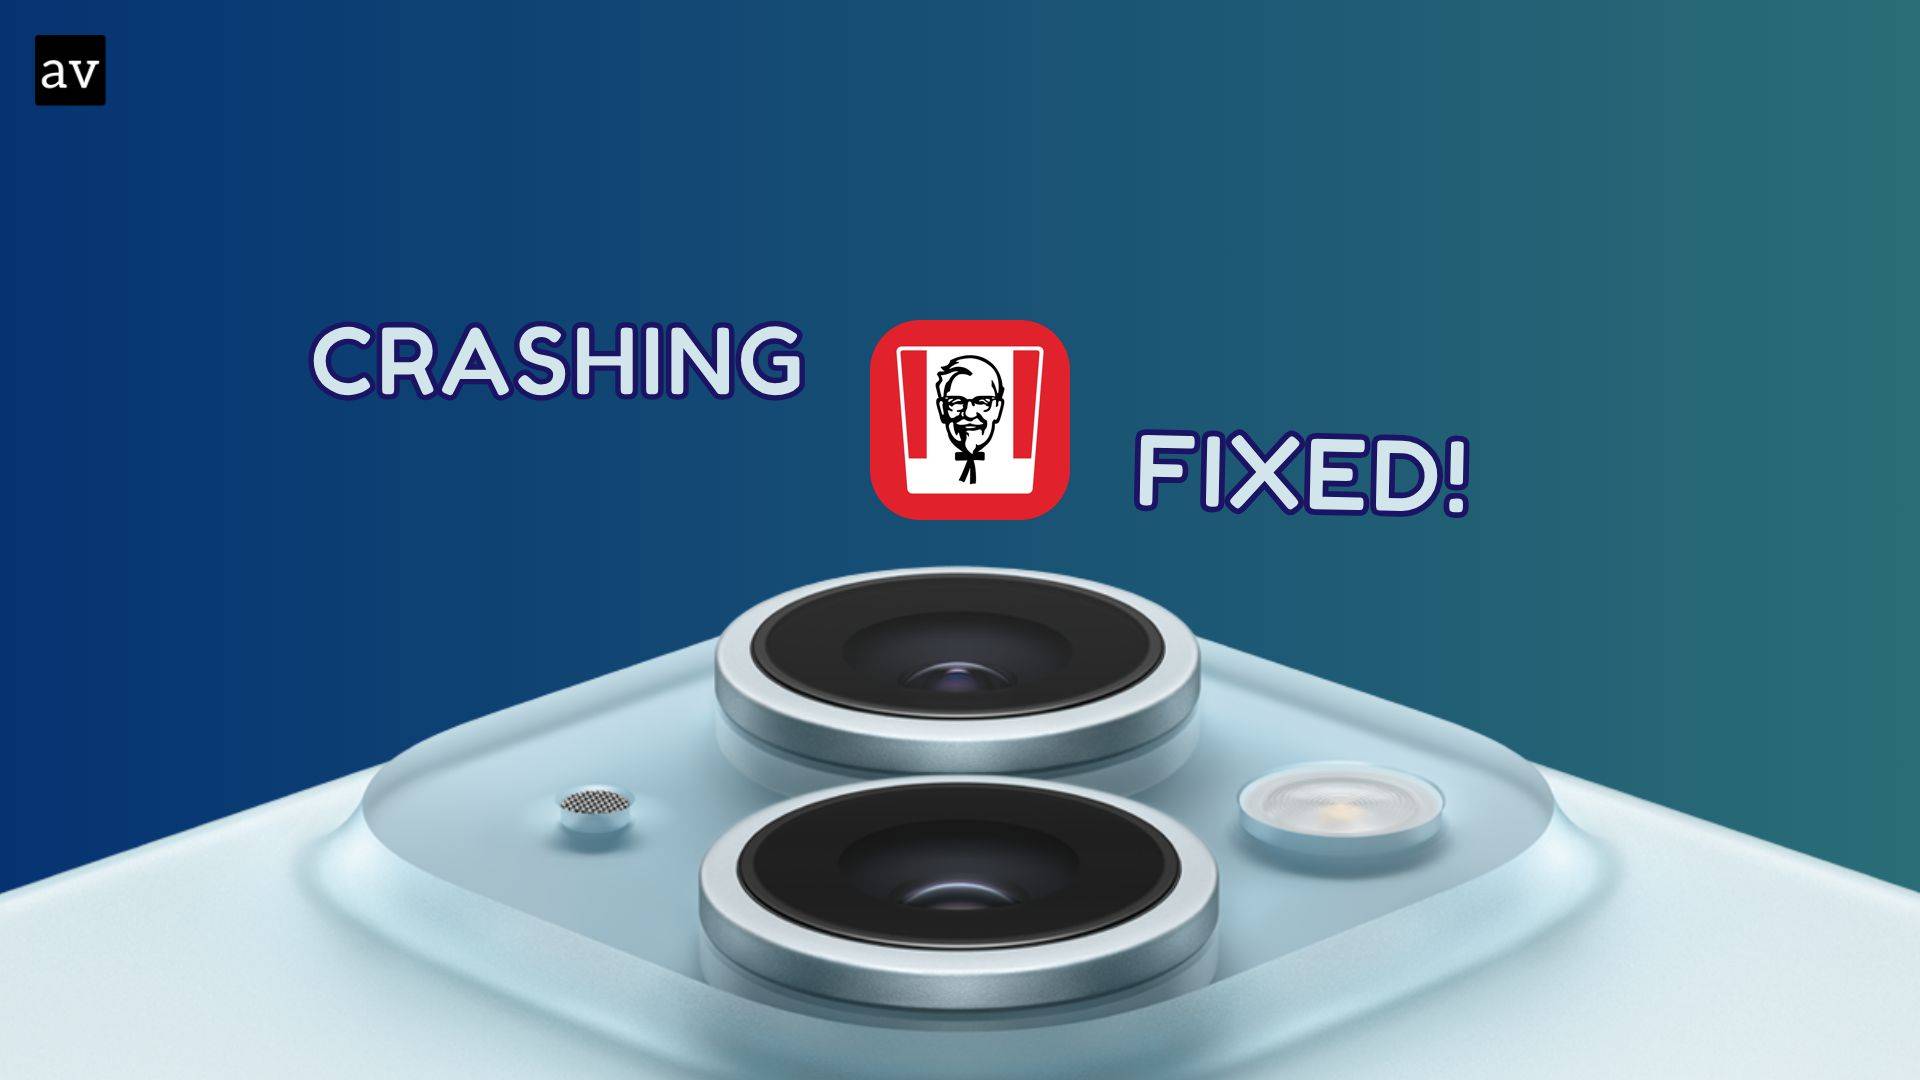 KFC and its fix of crashing by AppleVeteran